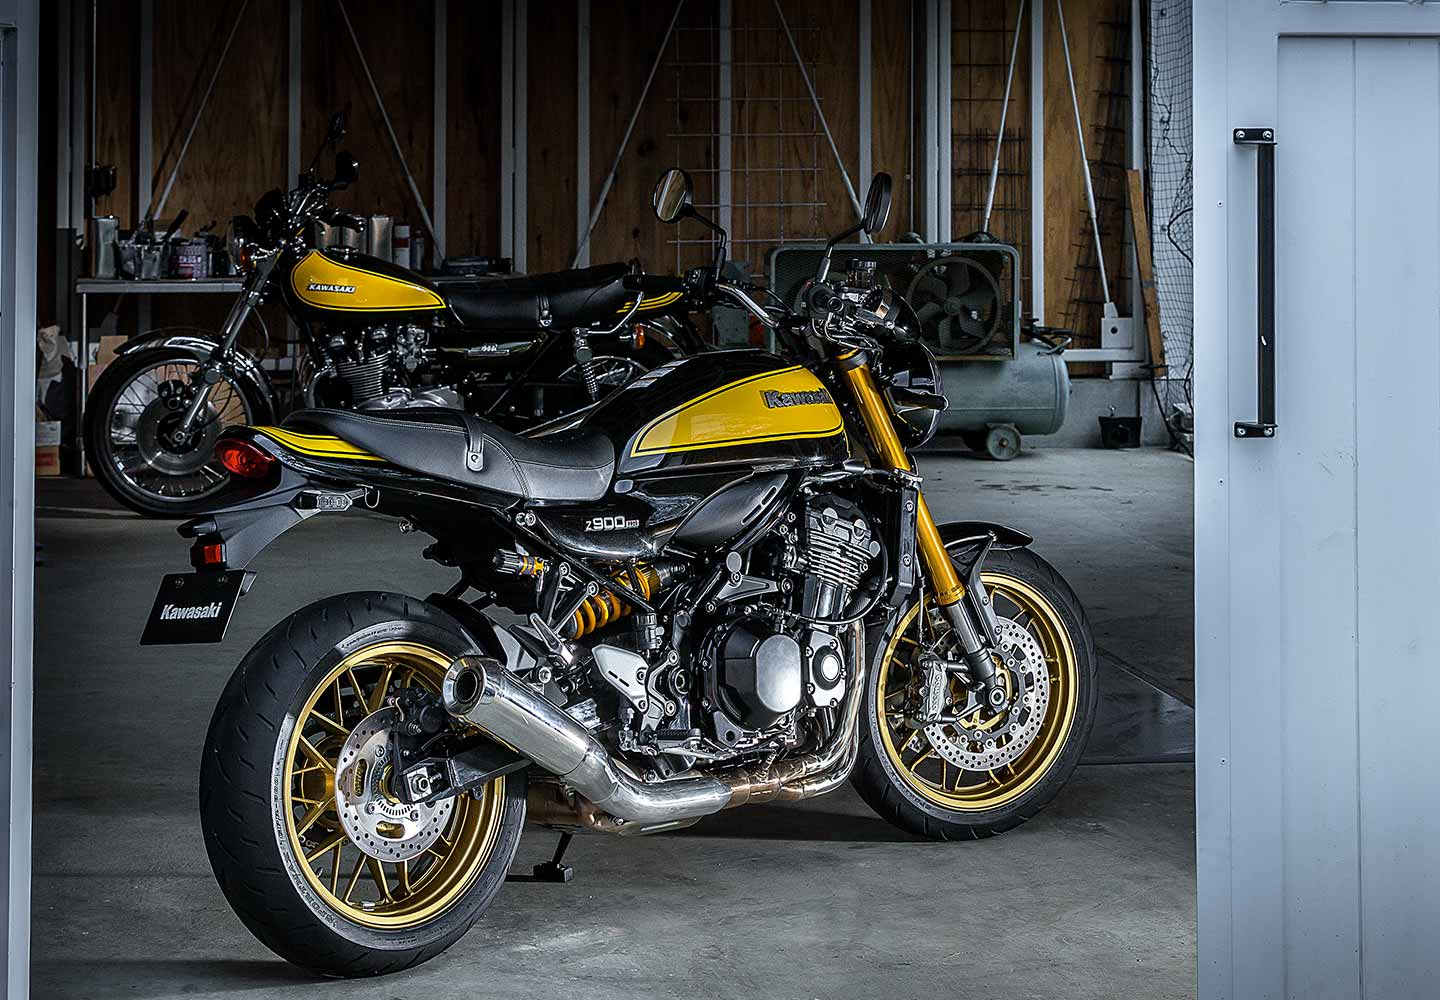 Kawasaki Z900RS | Iconic Retro Sport Motorcycle